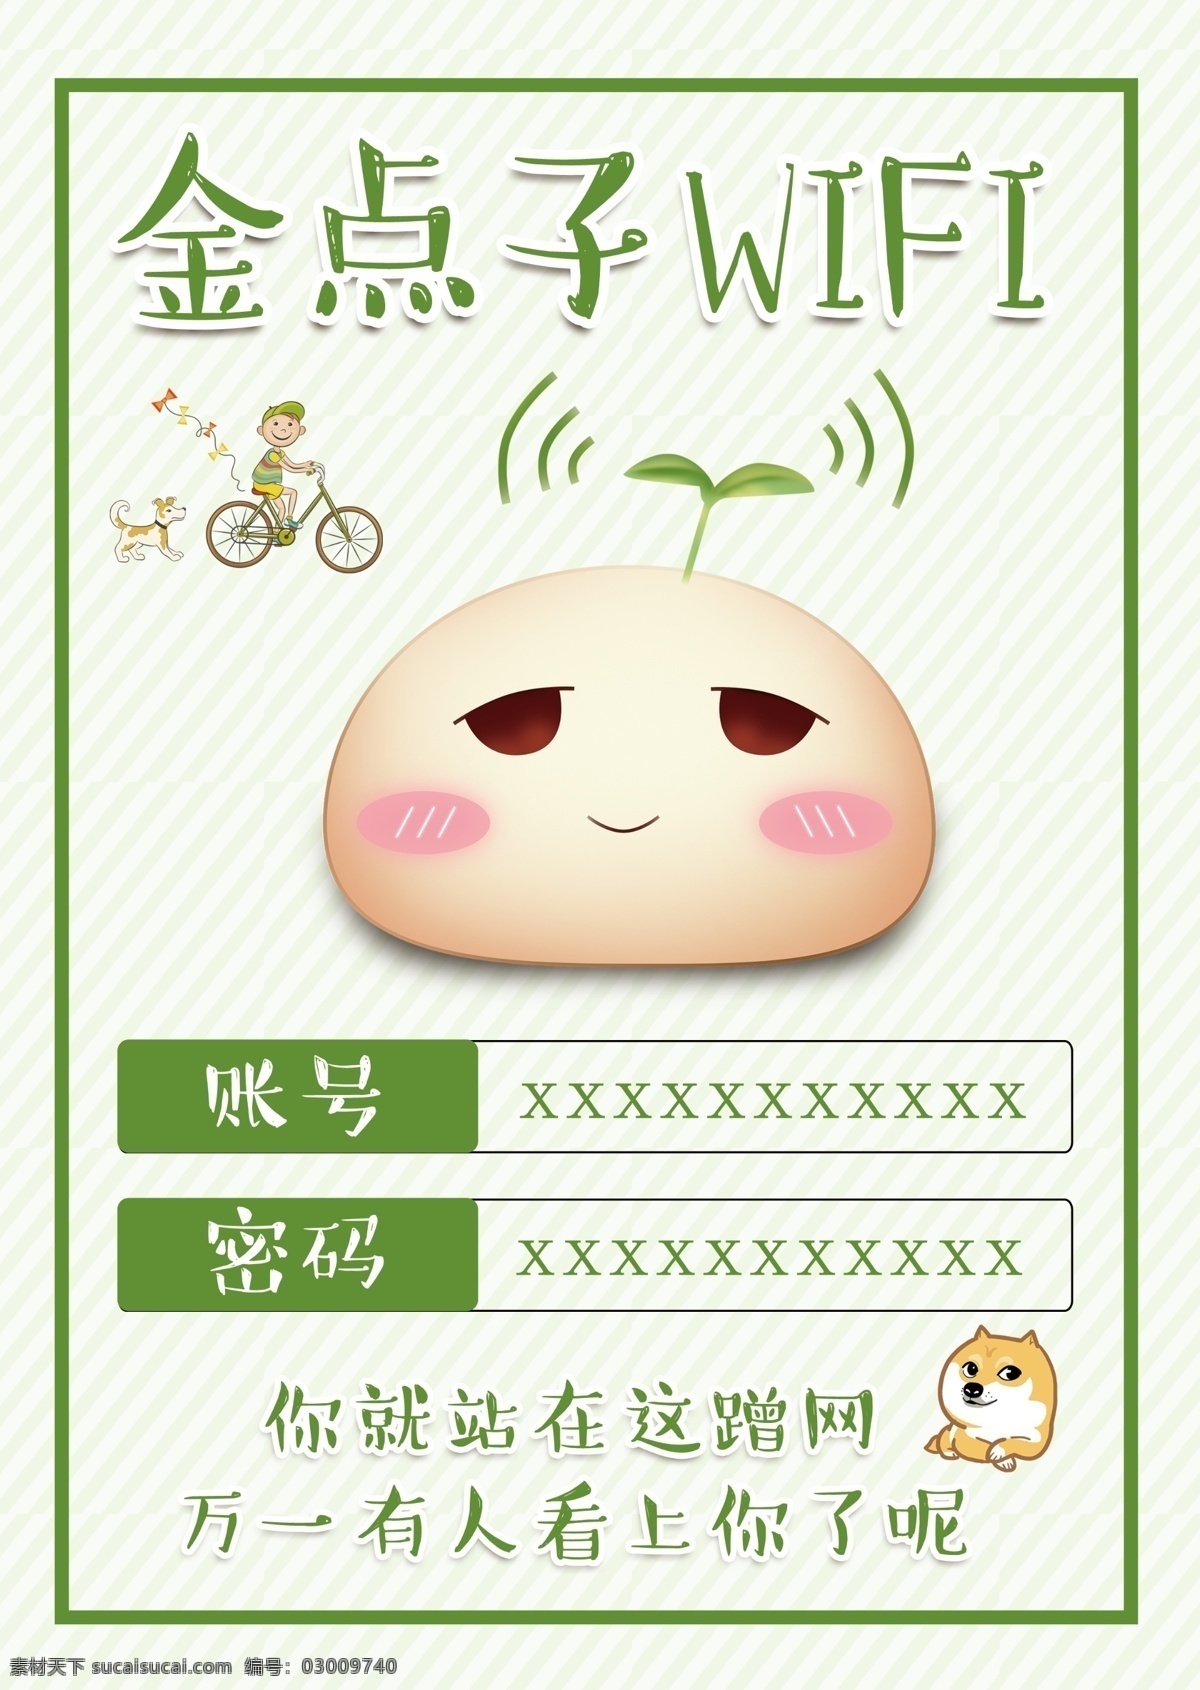 wifi wifi展板 免费 海报 免费wifi